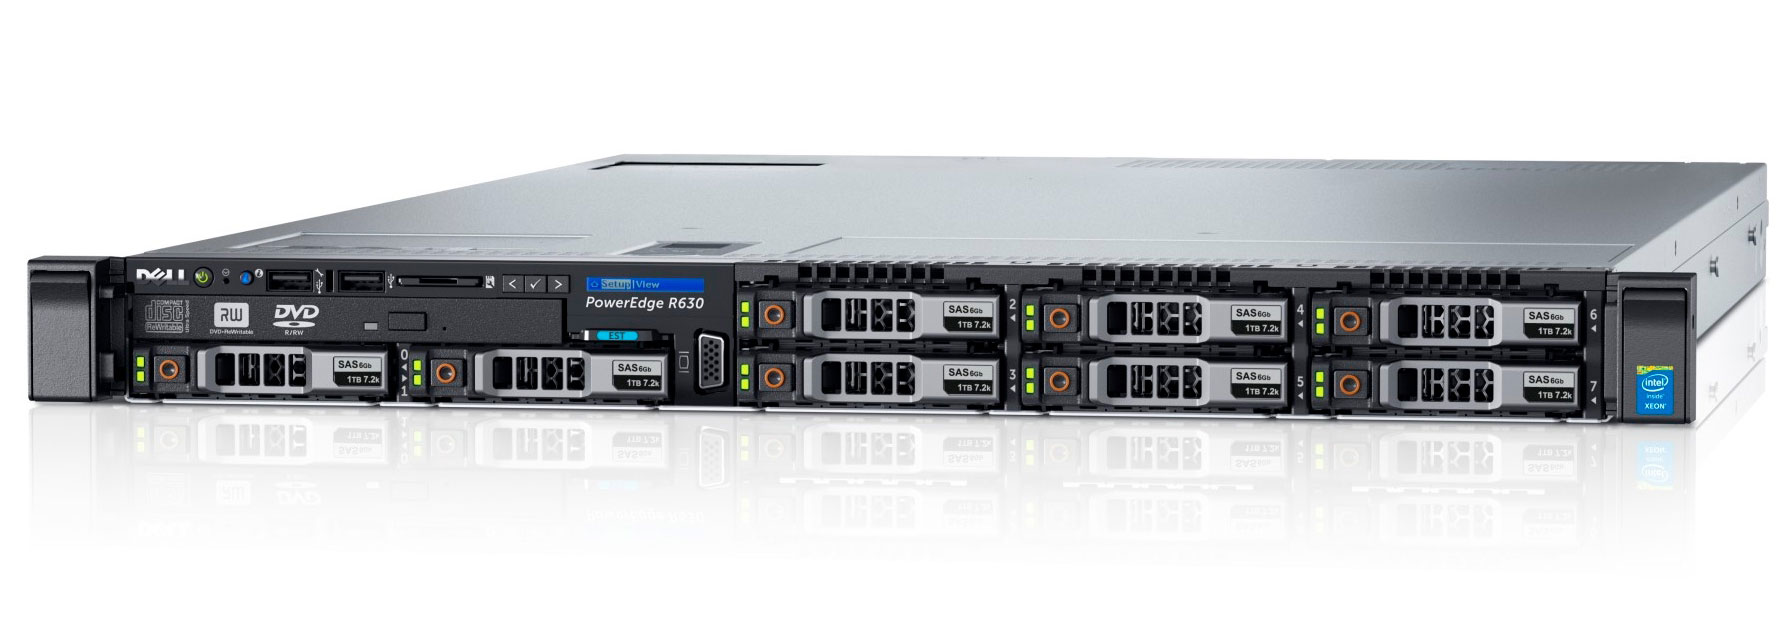 Подробное фото Сервер DELL PowerEdge R630 Xeon 2x E5-2620v3 64Gb 2133P DDR4 8x noHDD 2.5", SAS RAID Perc H730 mini, 1024Mb, DVD, 2*PSU